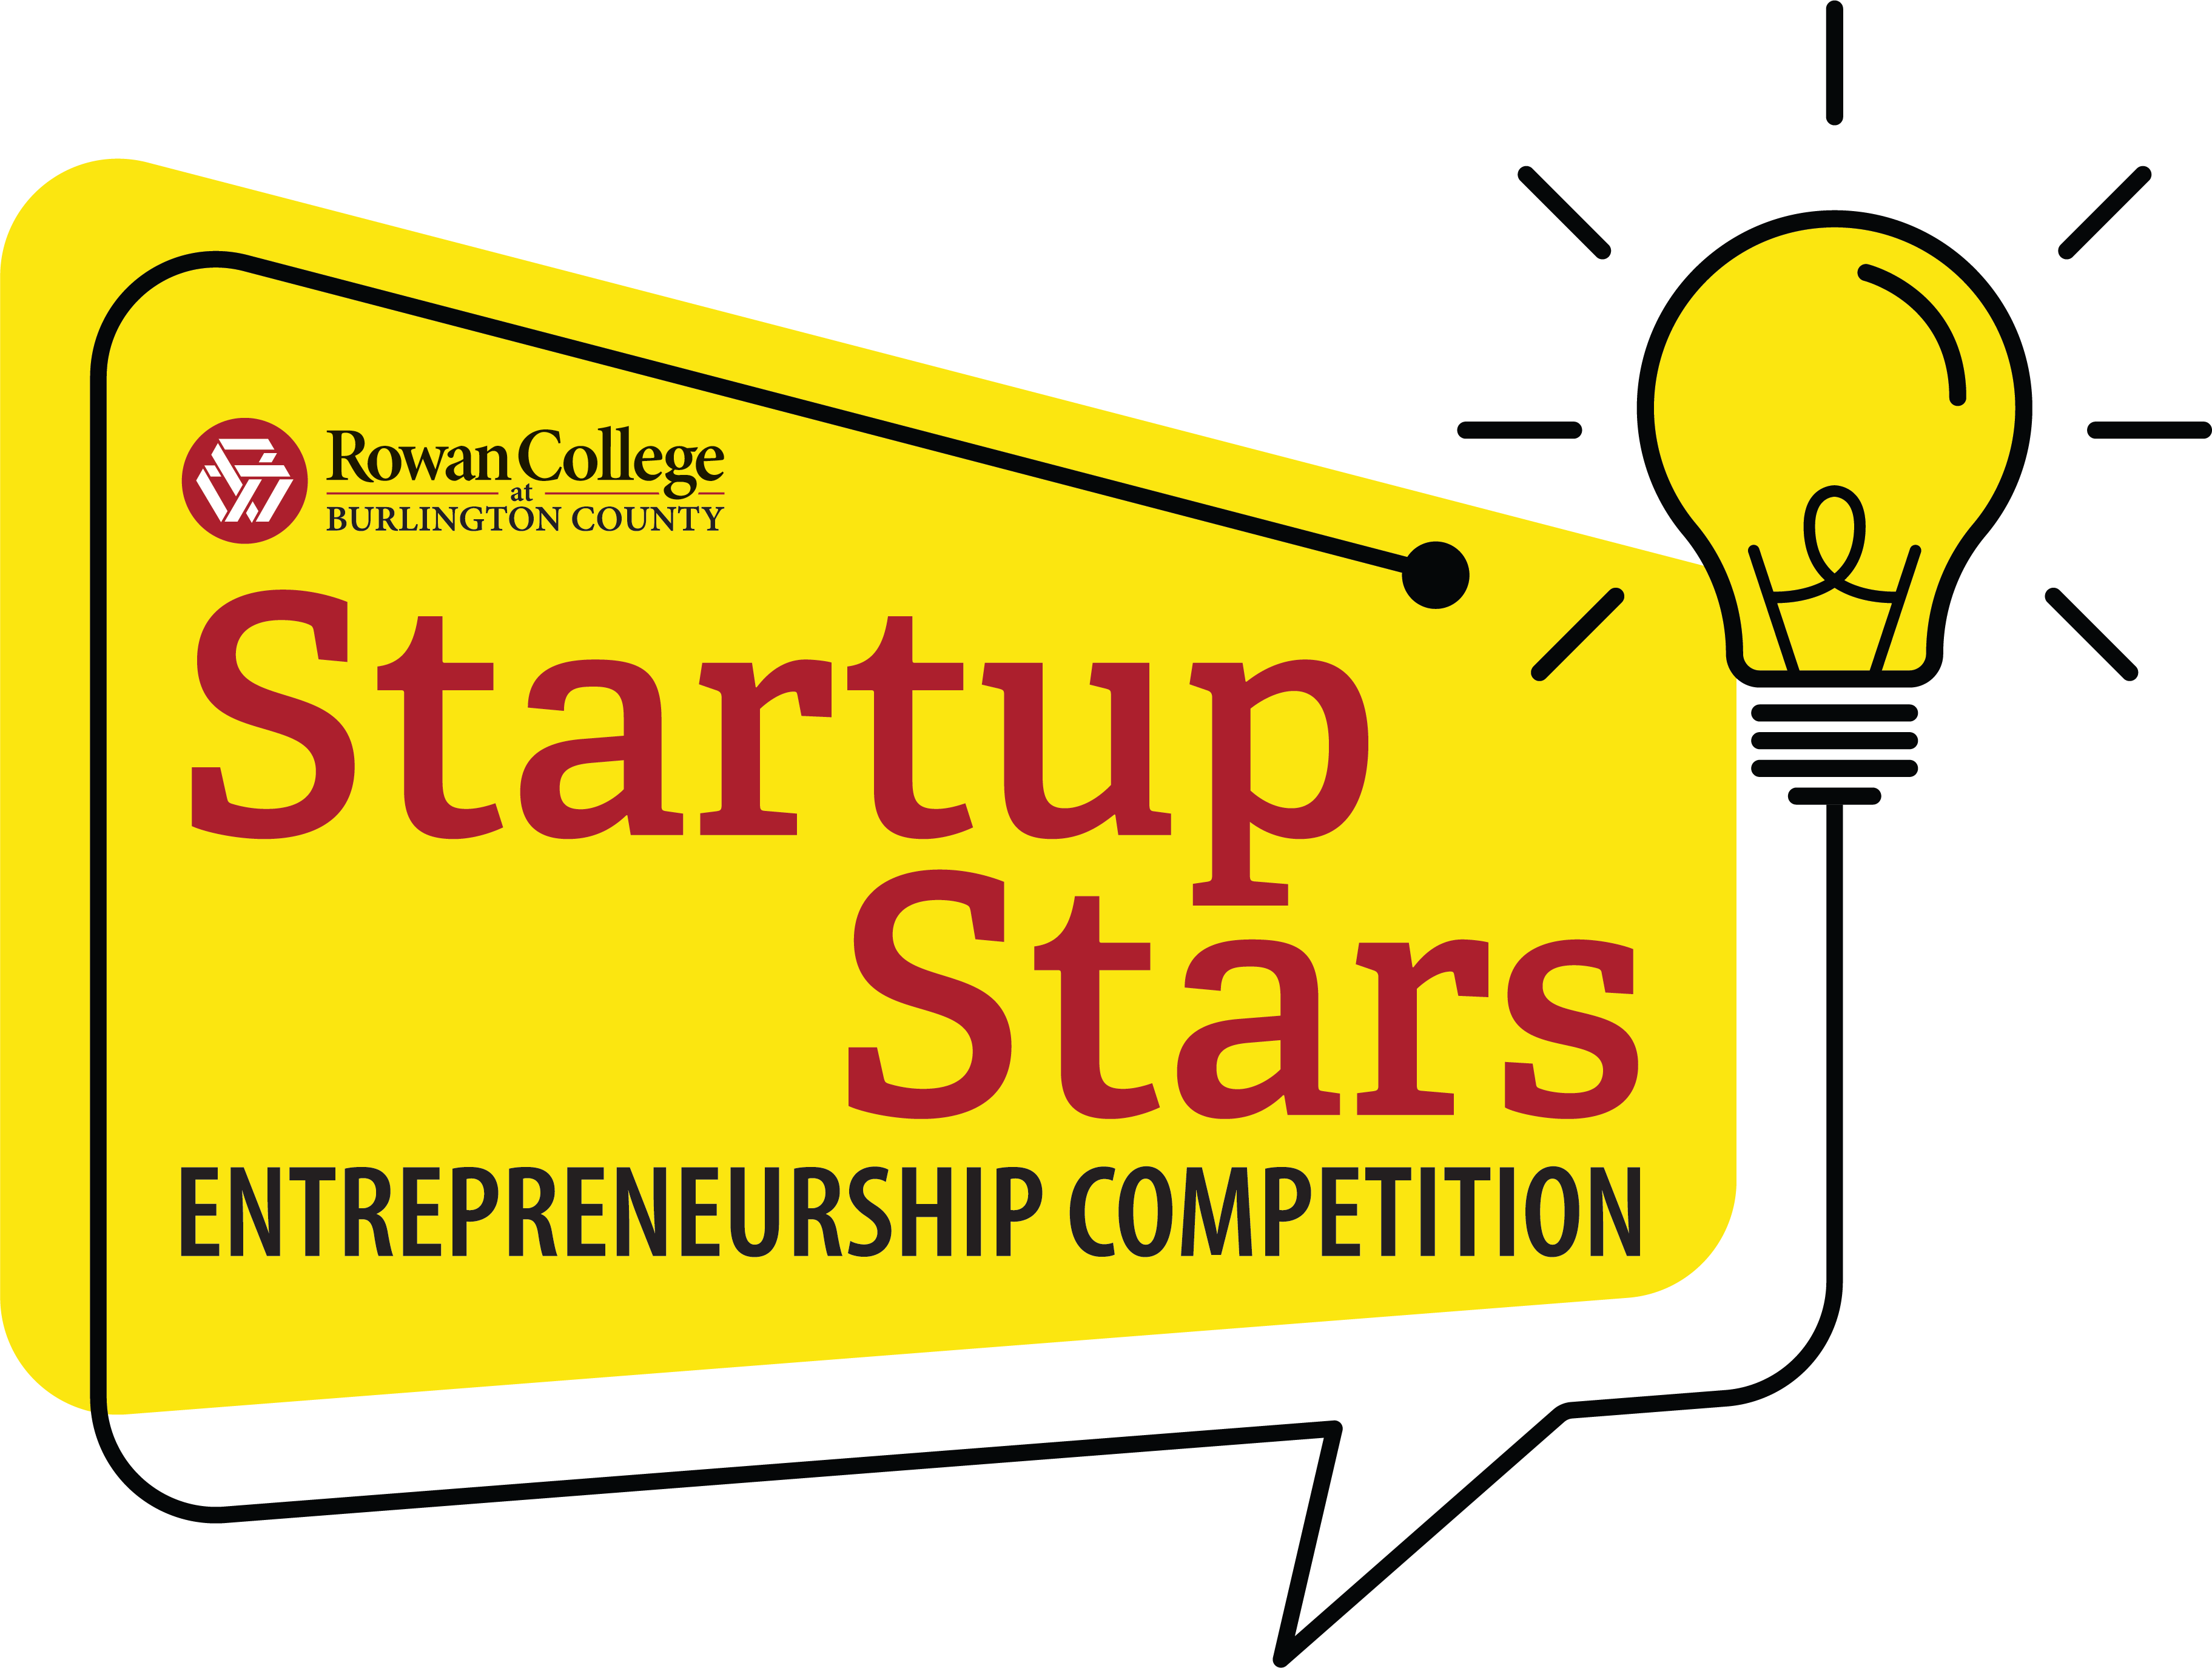 RCBC Startup Stars Entrepreneurship Competition